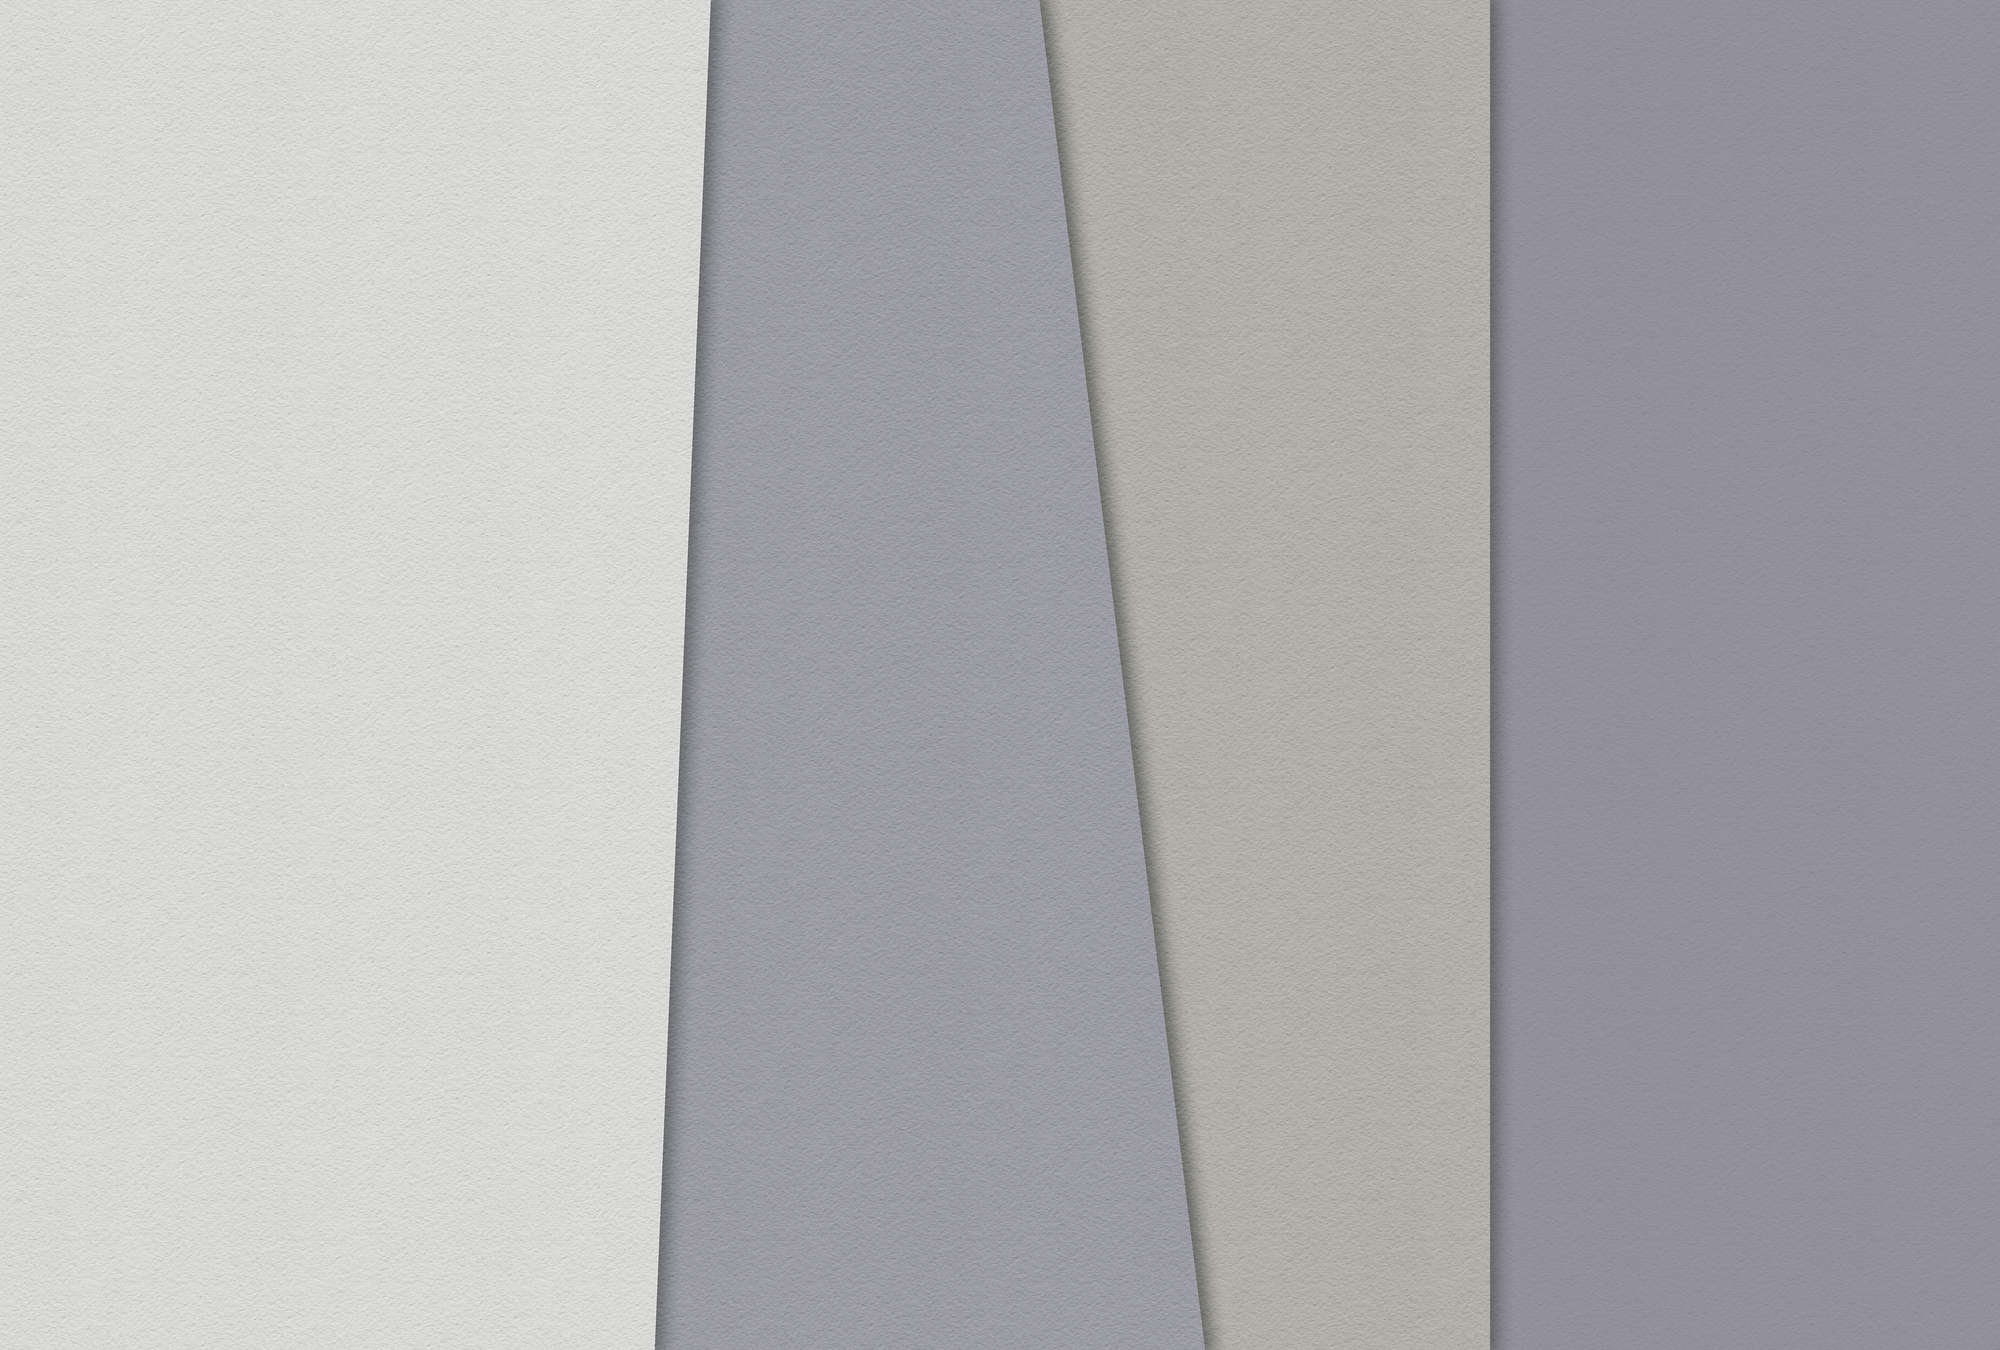             Gelaagd papier 2 - Grafisch behang, handgemaakt papier structuur minimalistisch ontwerp - crème, groen | parelmoer glad vlies
        